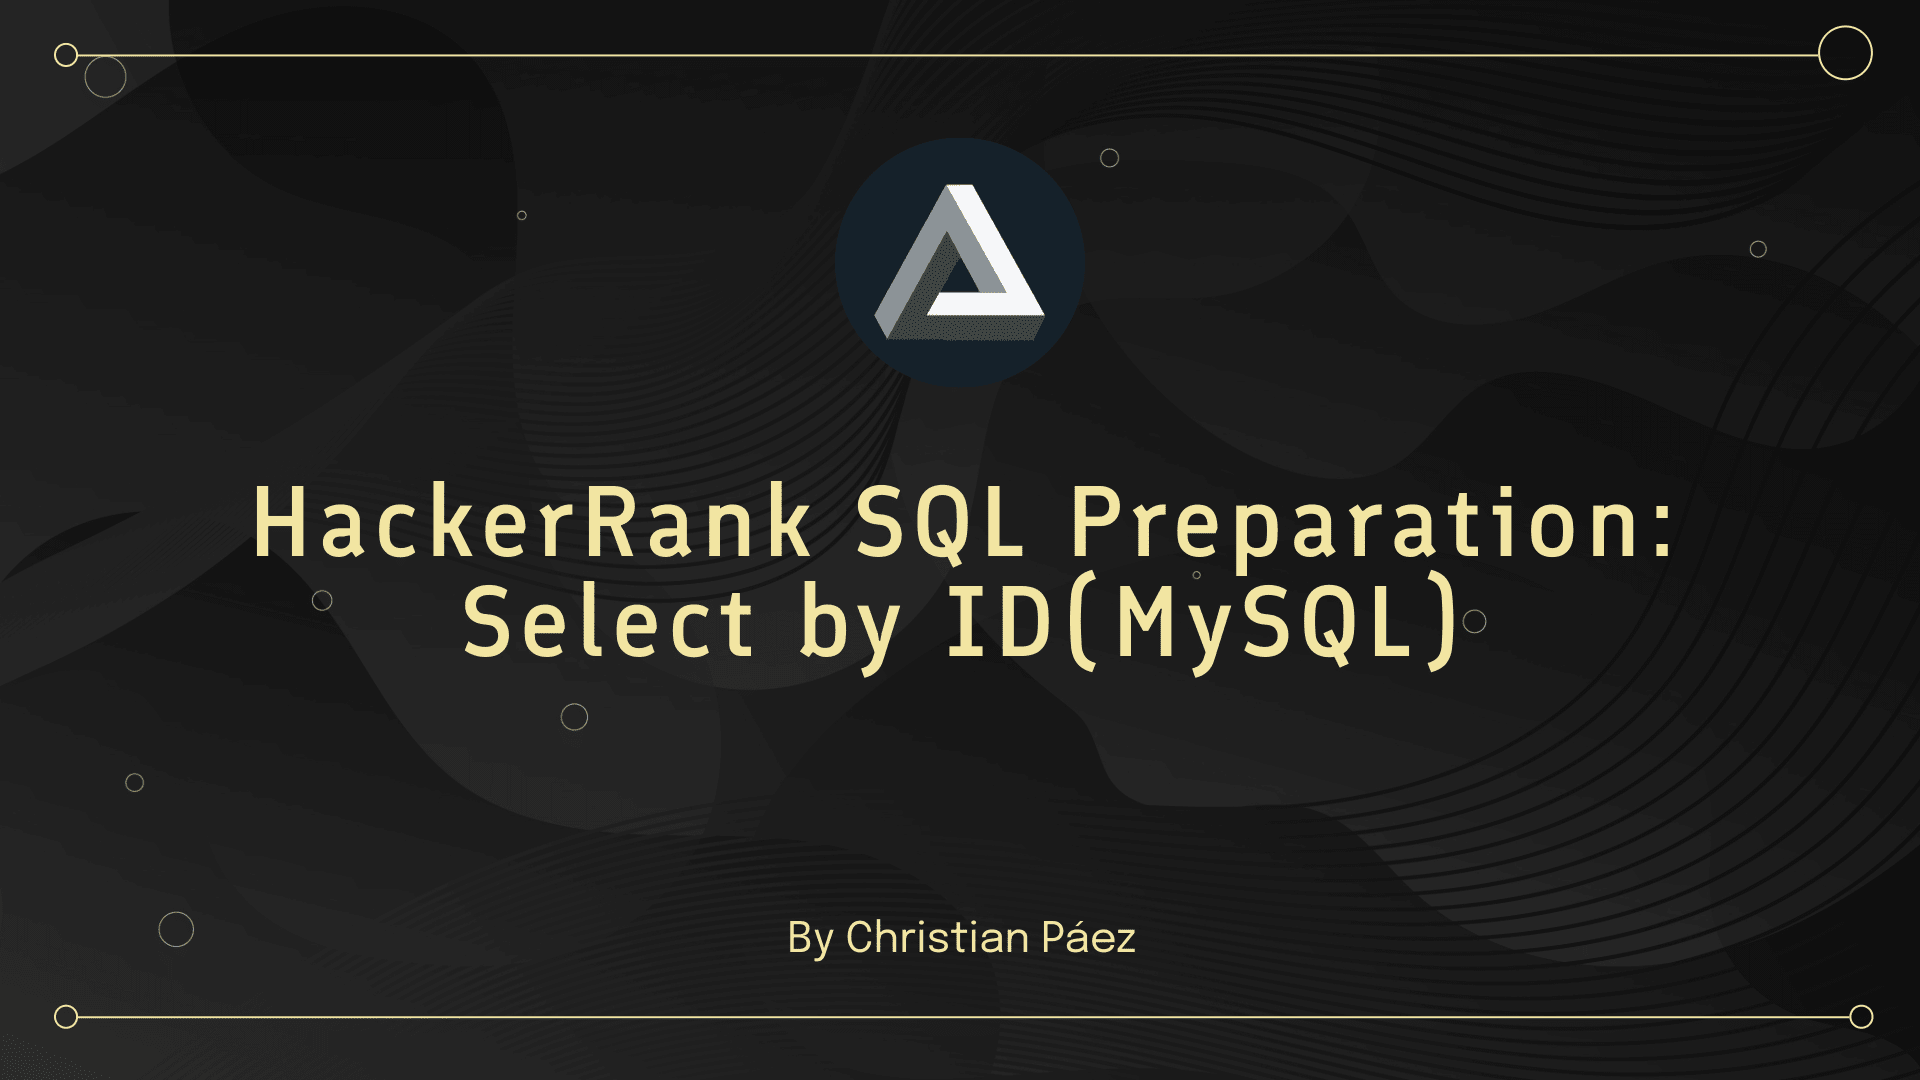 HackerRank SQL Preparation: Select by ID(MySQL)